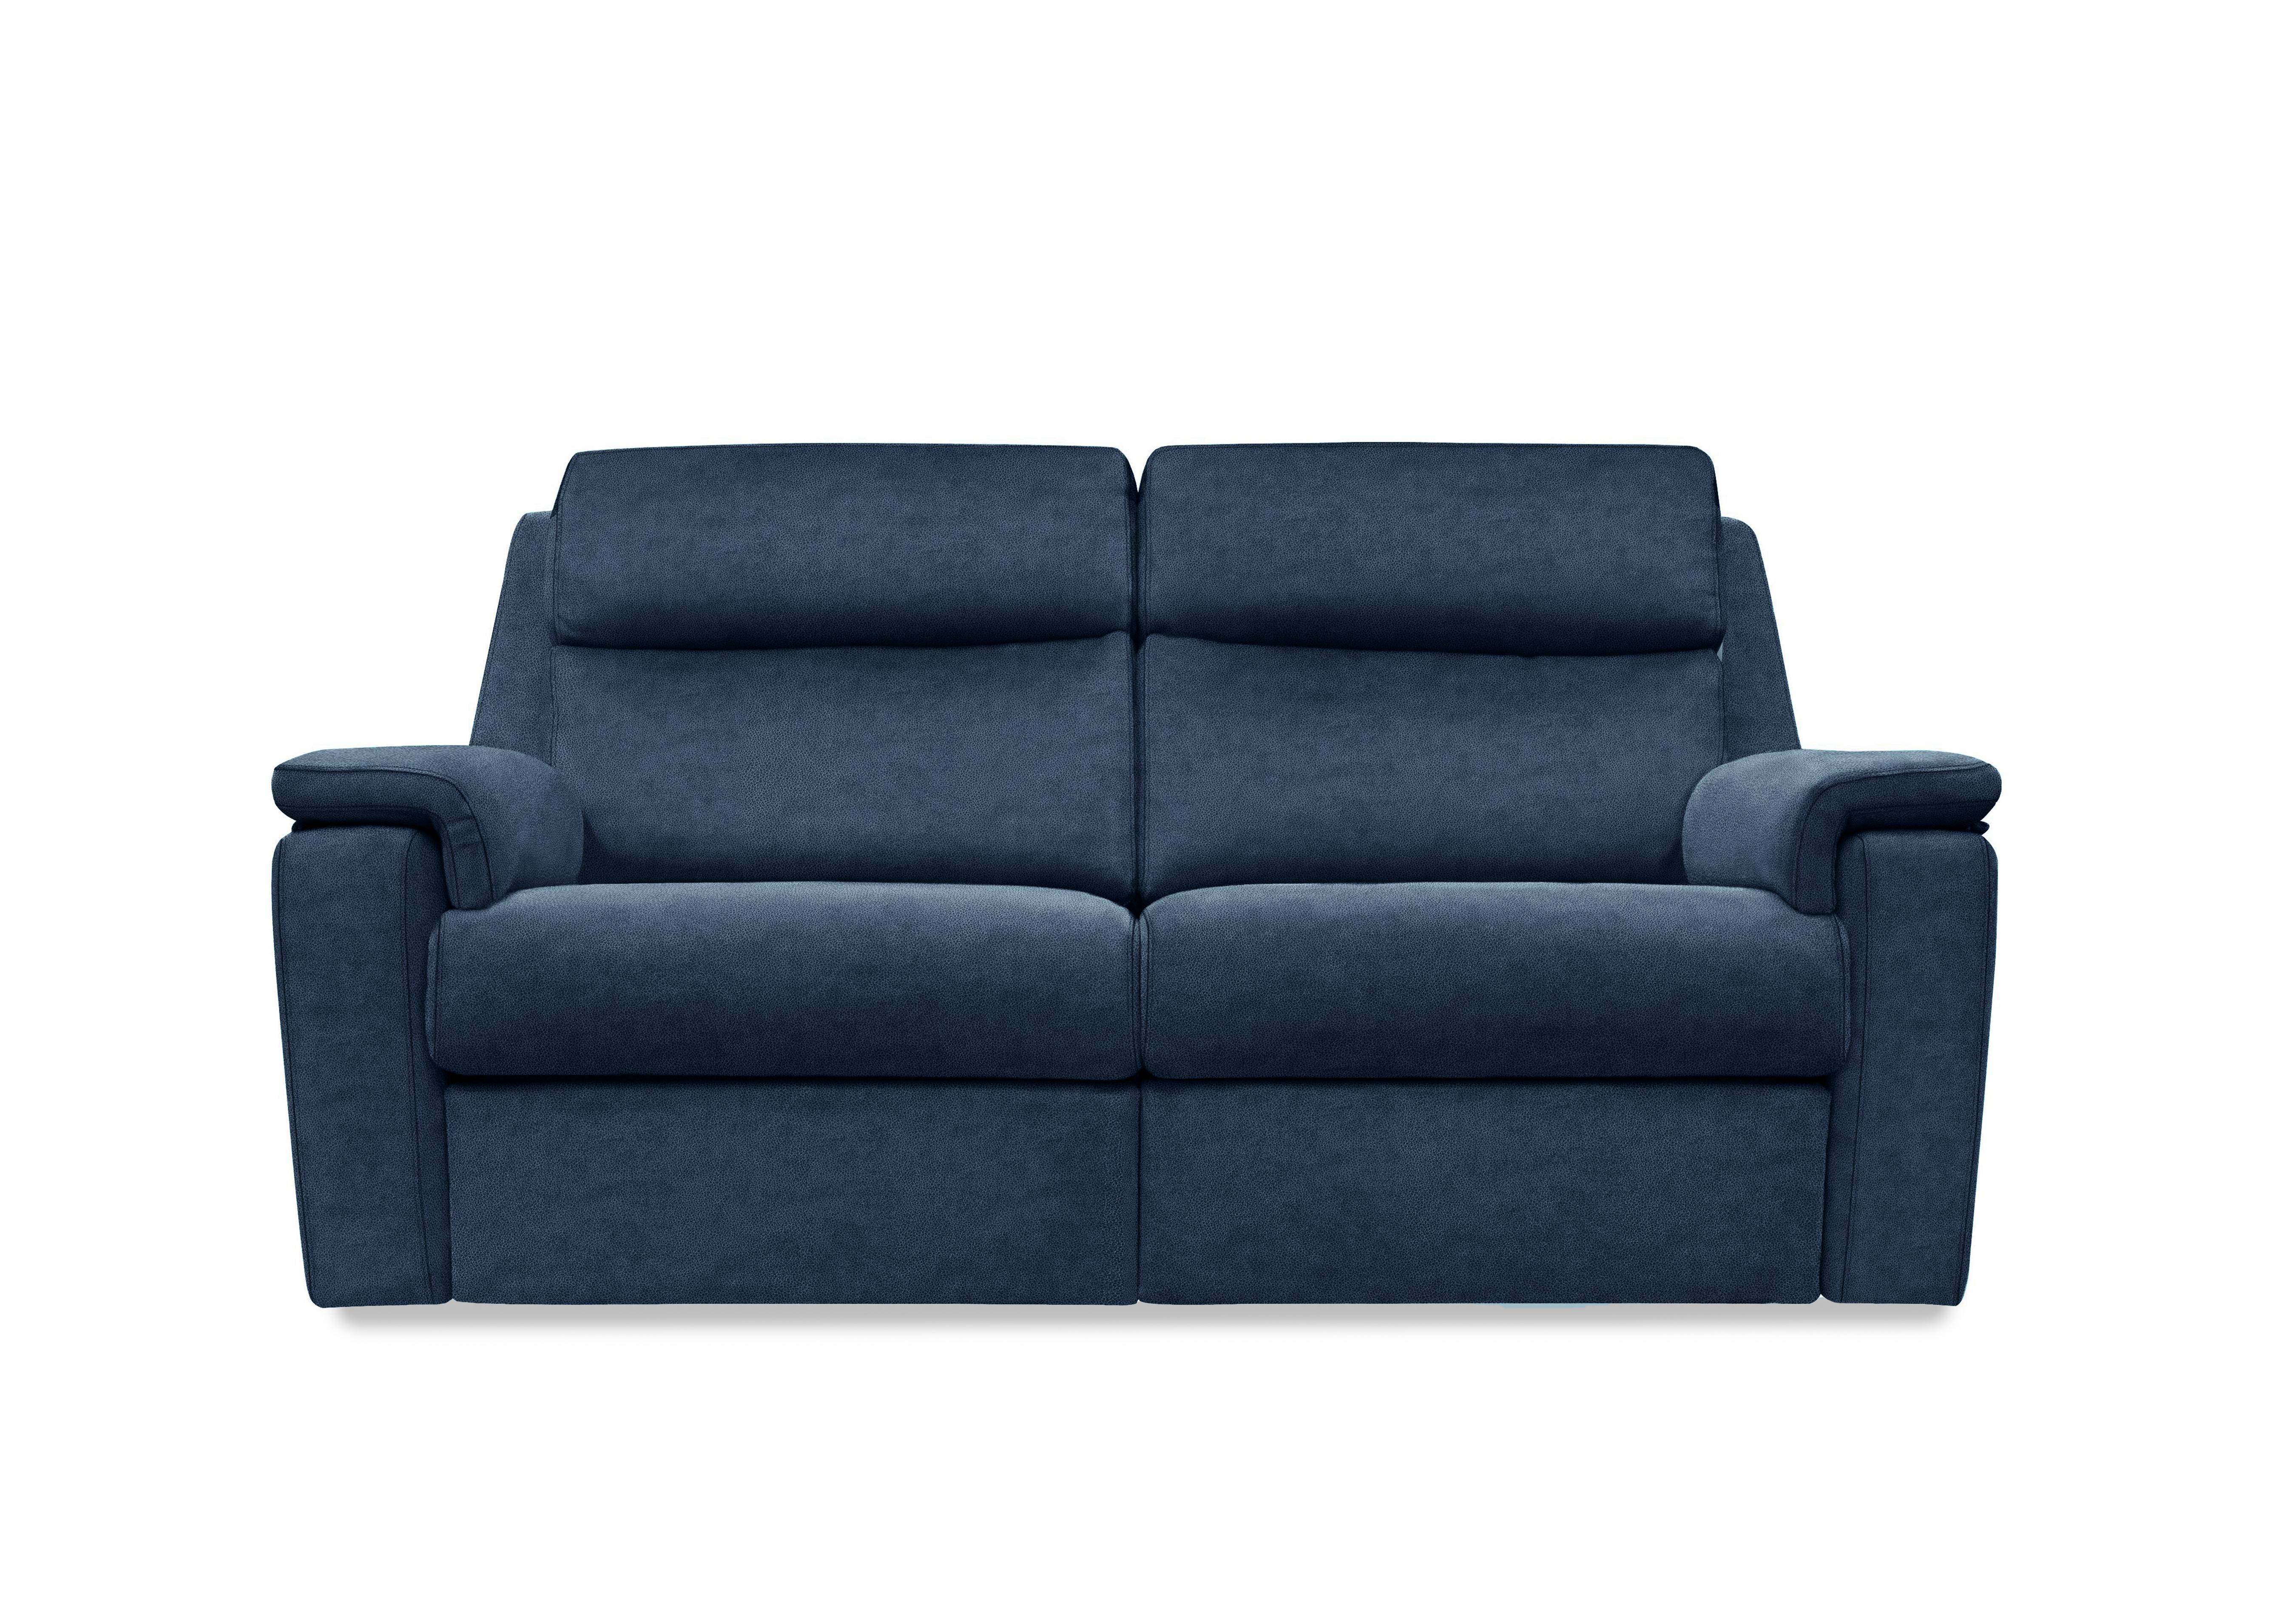 Thornbury 3 Seater Fabric Sofa in A125 Stingray Indigo on Furniture Village